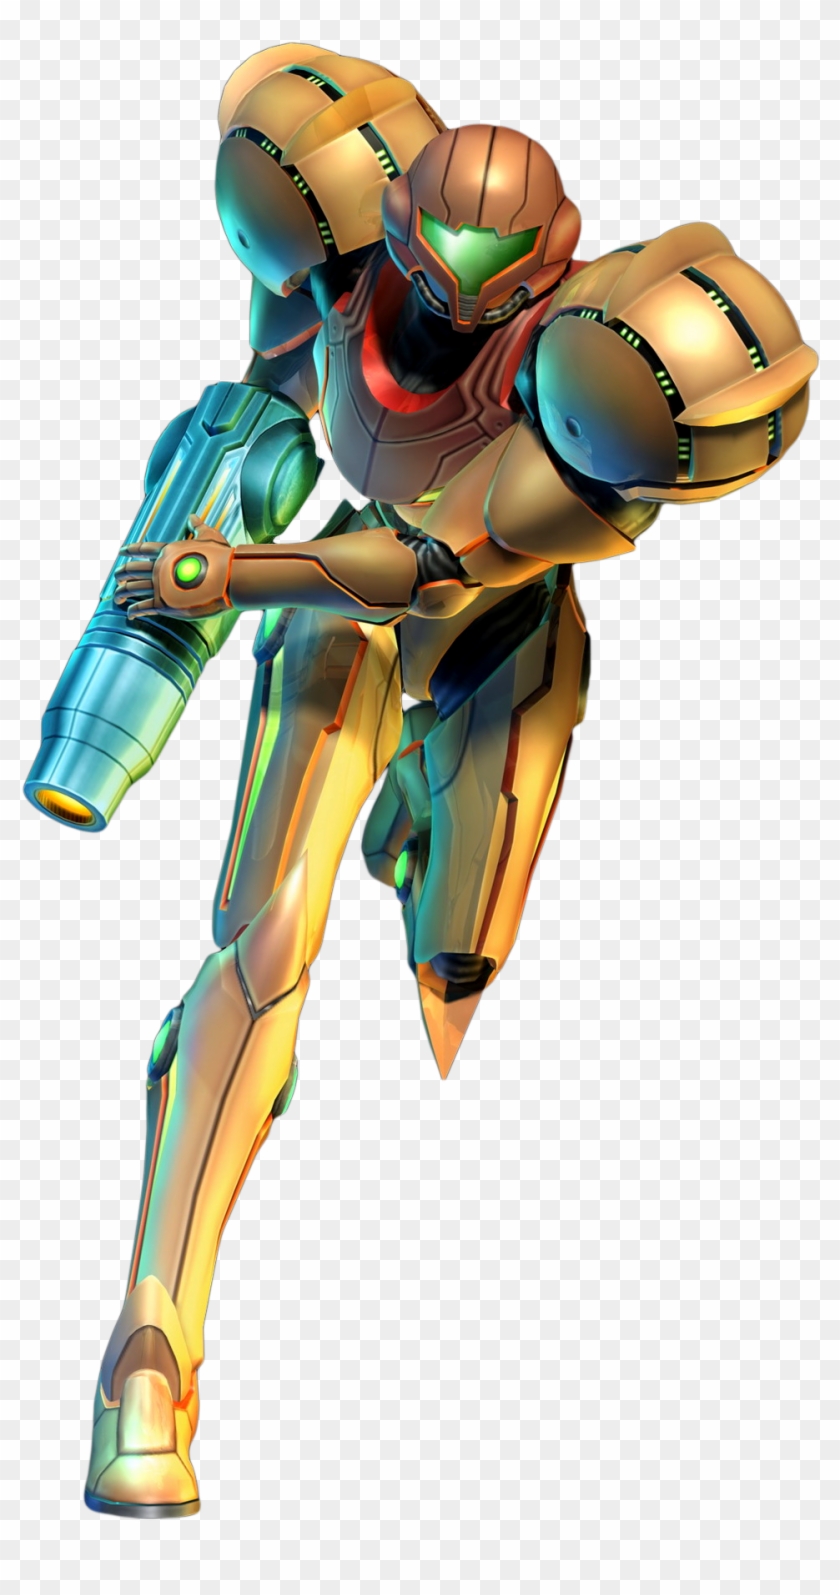 Fighters - Metroid Prime 3 Varia Suit Clipart #179260